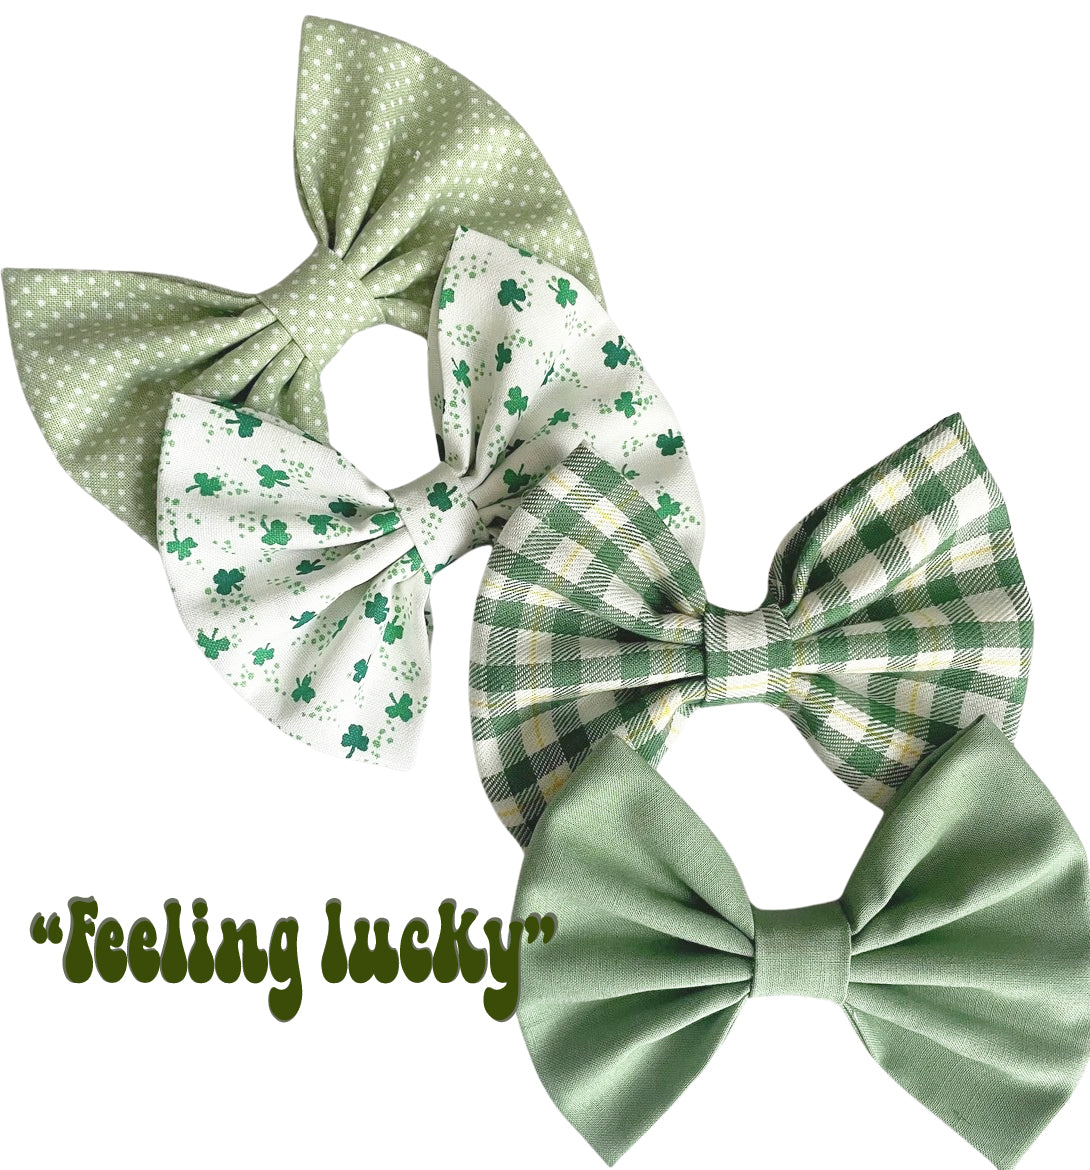 "Feeling Lucky" St Patrick's Bow Set